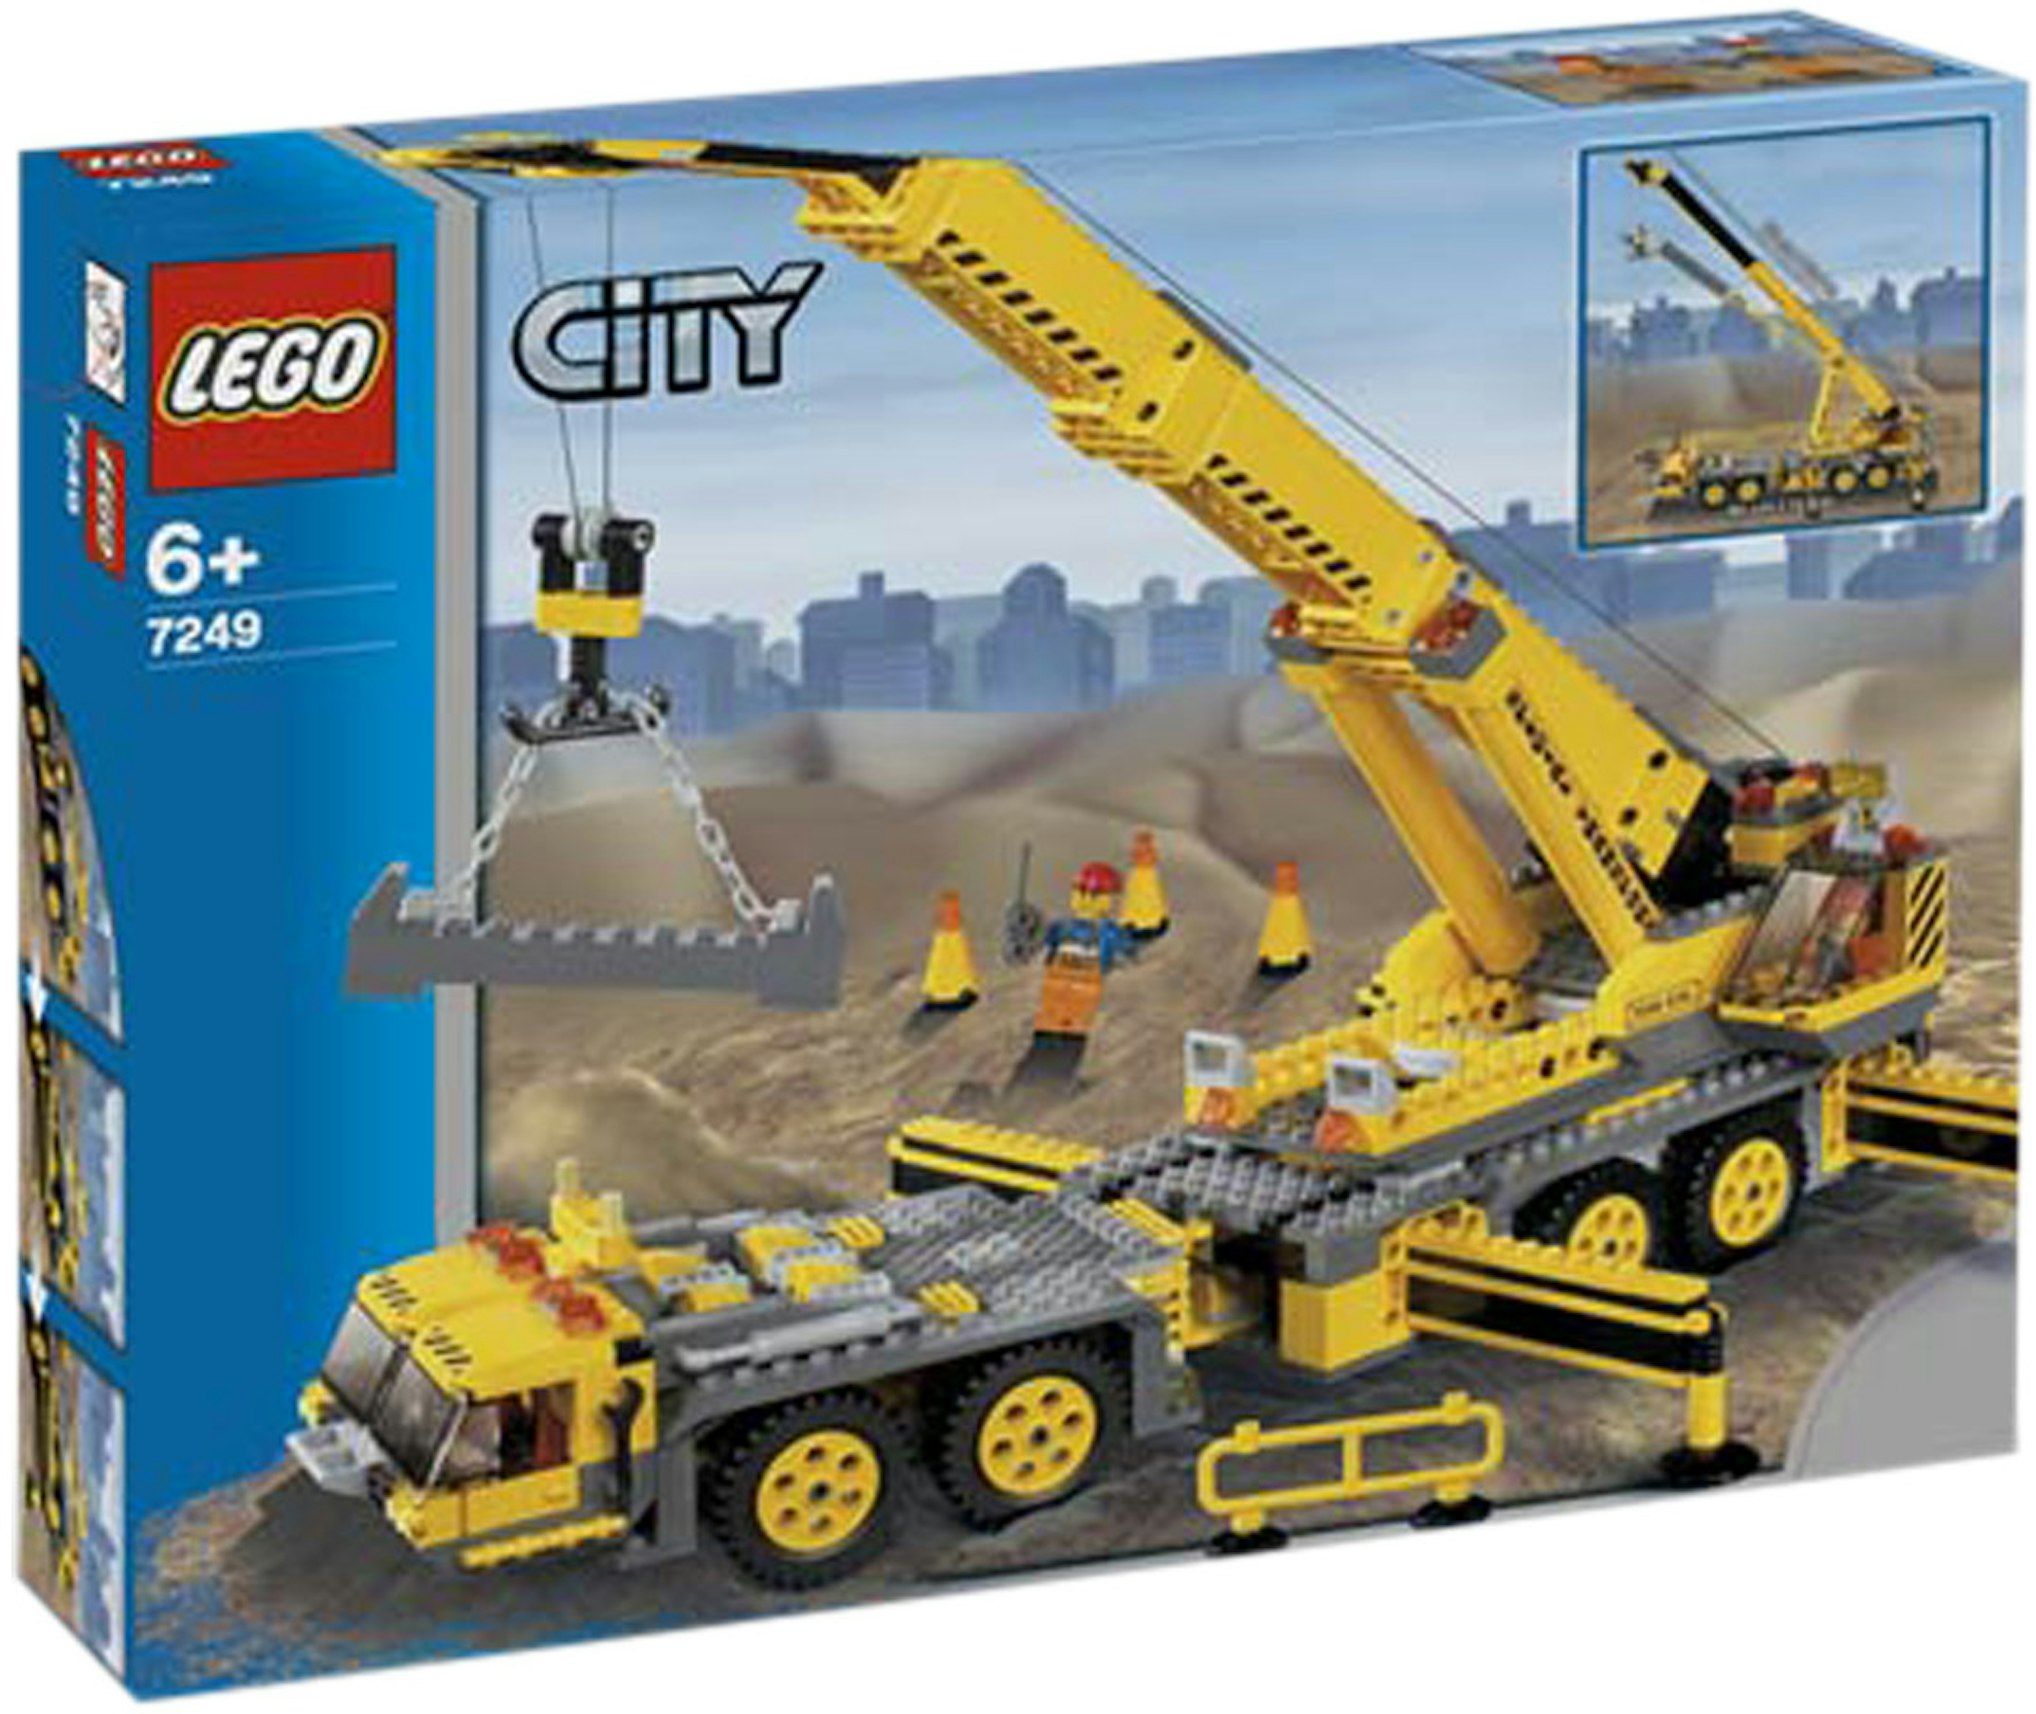 LEGO City XXL Mobile Crane Set 7249 US